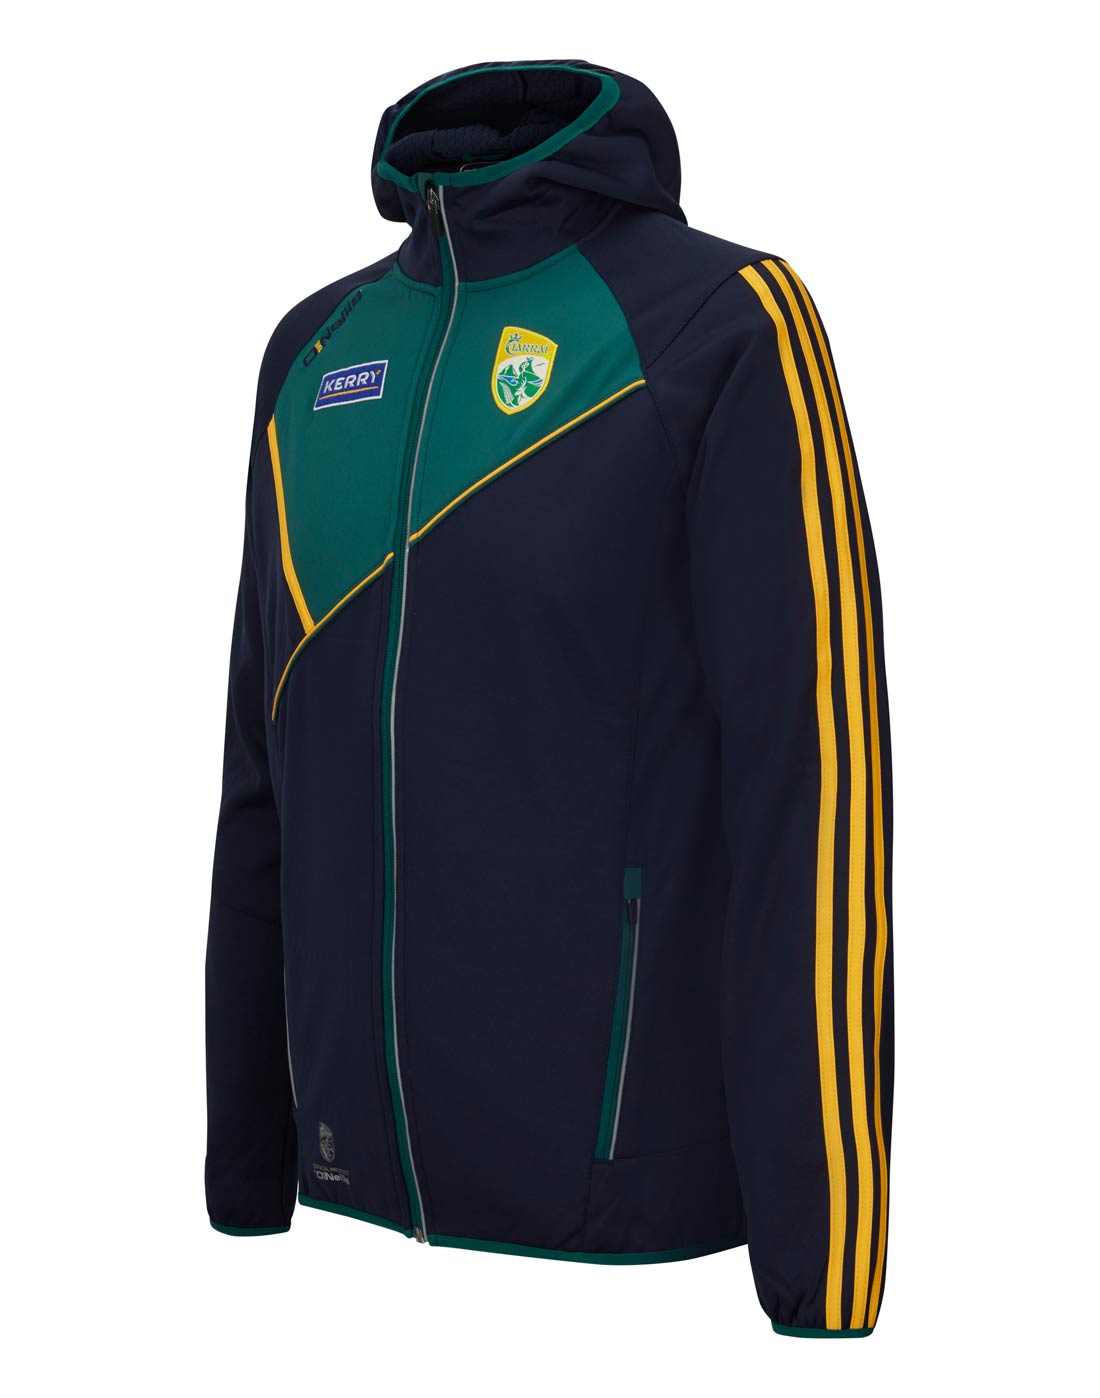 O'Neills Kerry Training Jacket | Life Style Sports